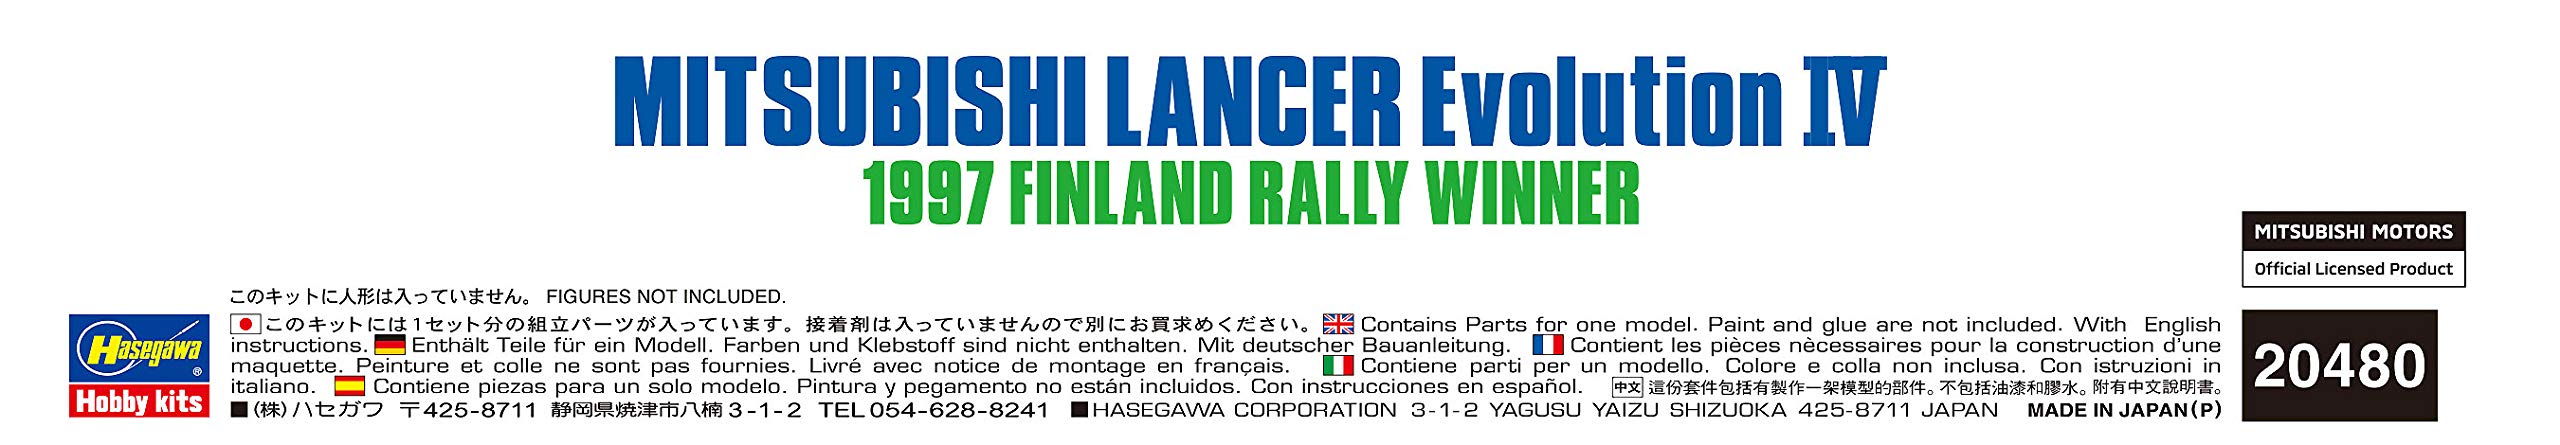 Hasegawa 1/24 Mitsubishi Lancer Evolution IV 1997 Finland Rally Winner Voiture de course en plastique